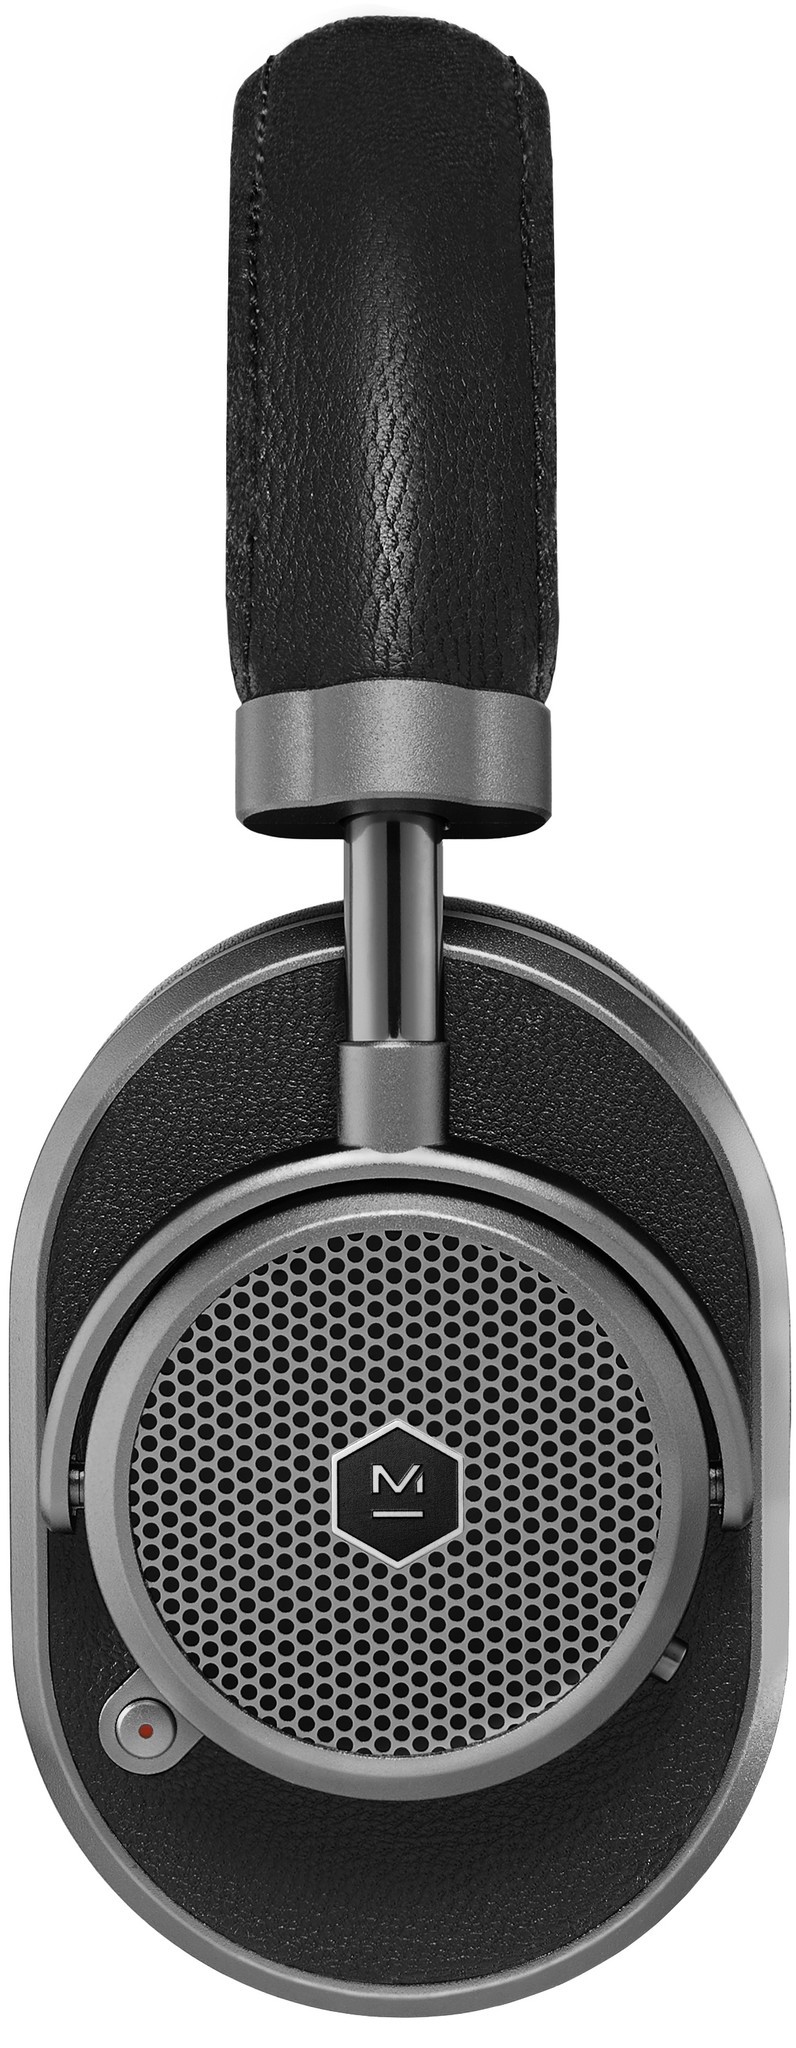 Mw65 headphones in black